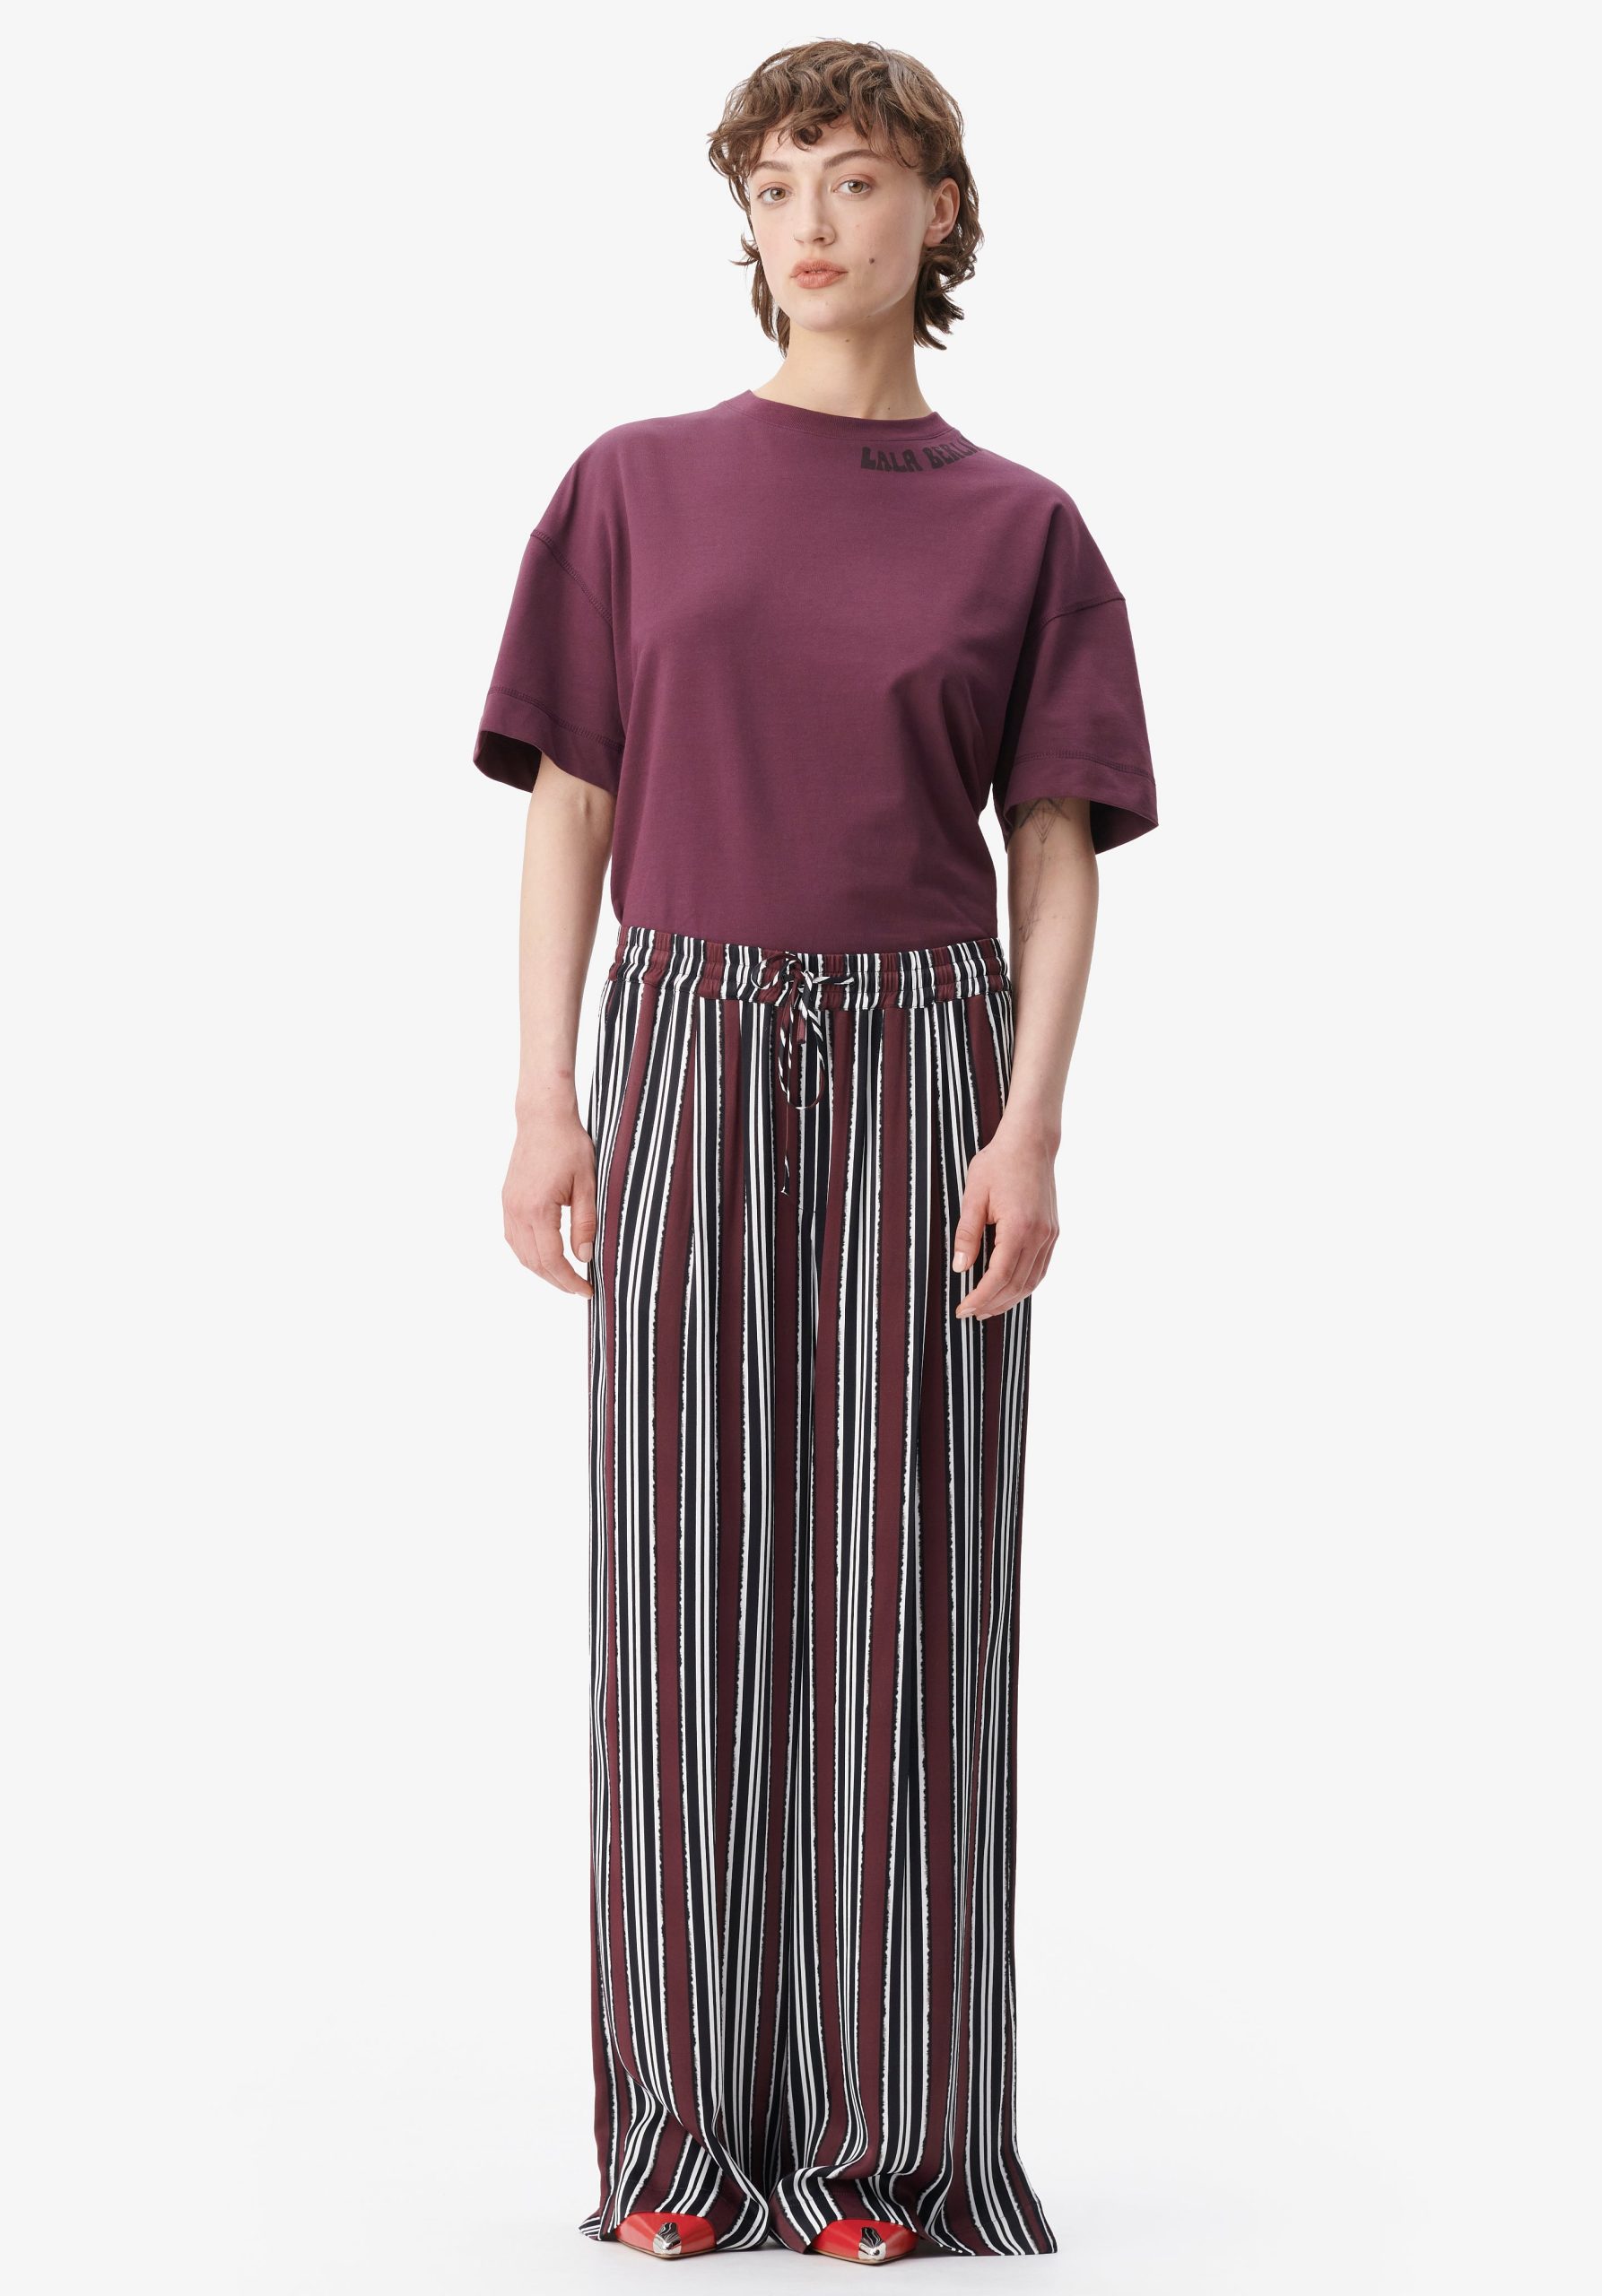 Eigenschaft Lala Berlin Pants Perlo Shibori Stripe Damen Hosen & Röcke – 2